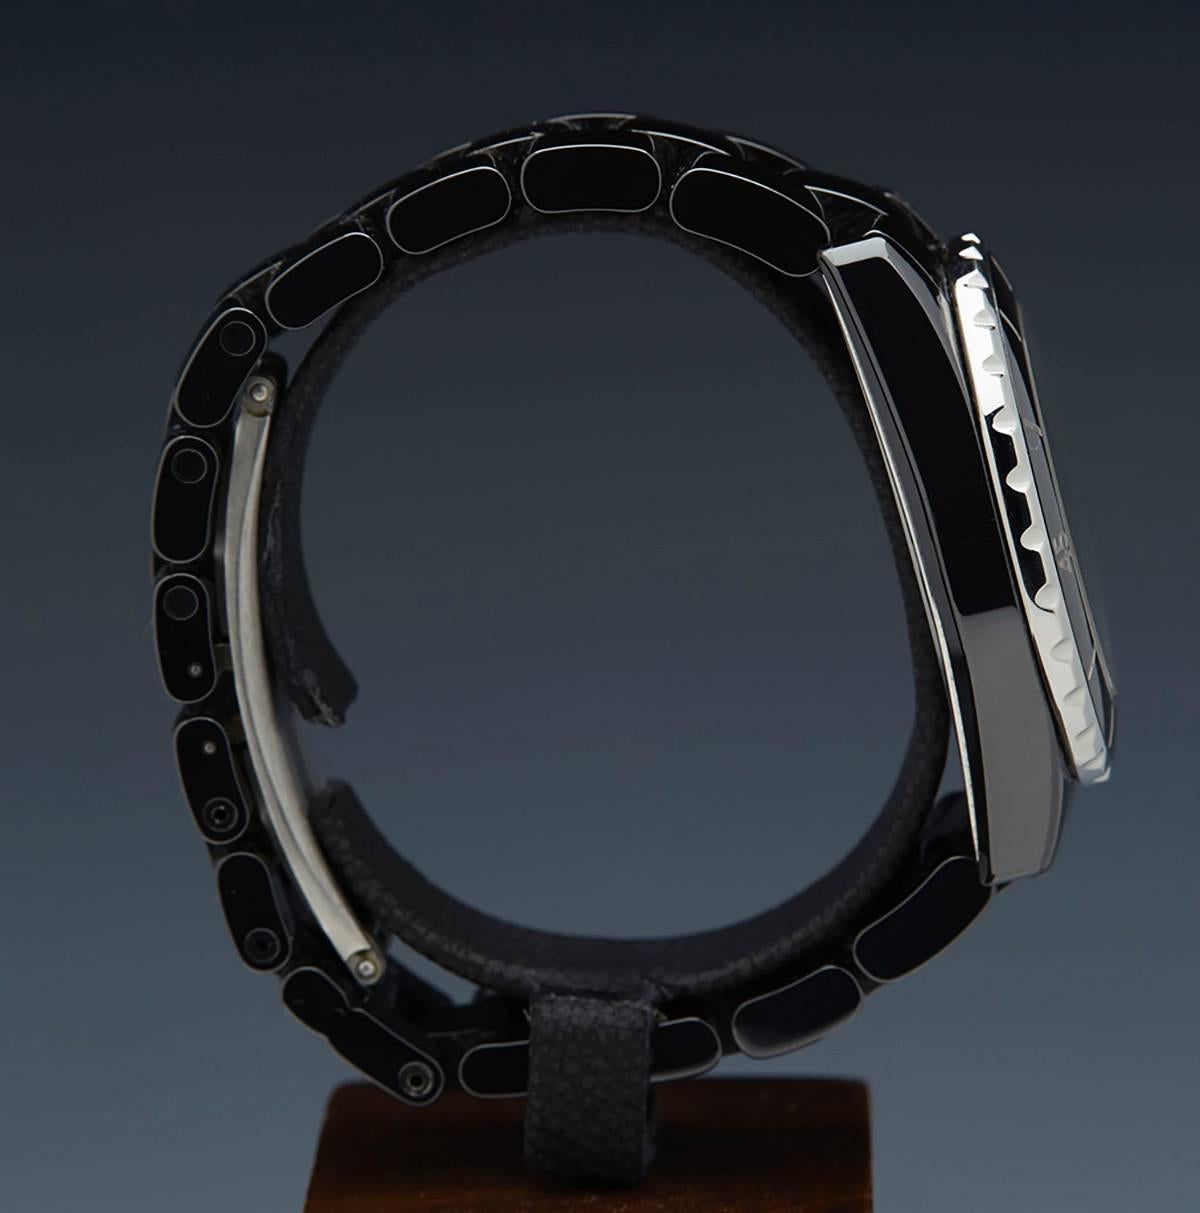 2006 Chanel Black Ceramic/Stainless Steel Unisex Watch H0685 2